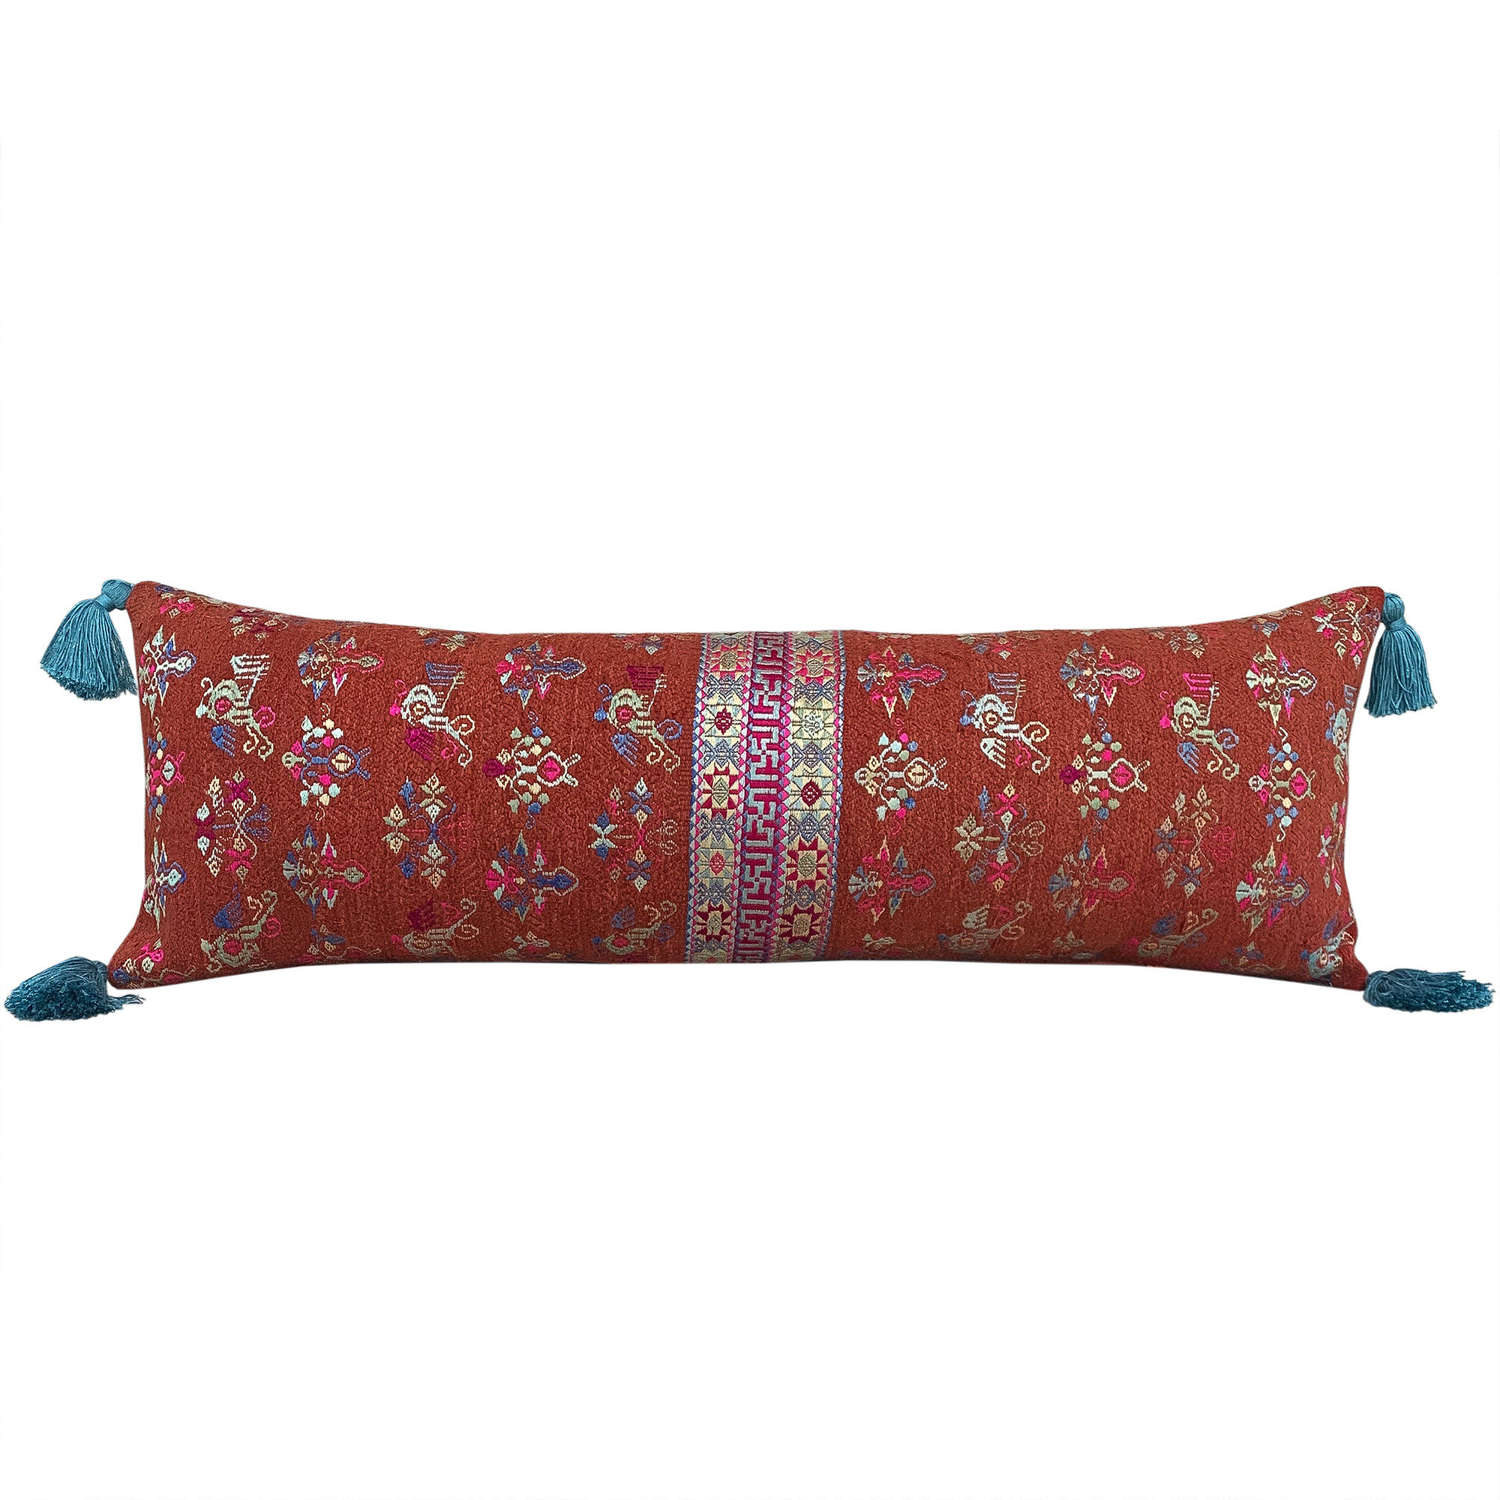 Maonan long cushion with tassels